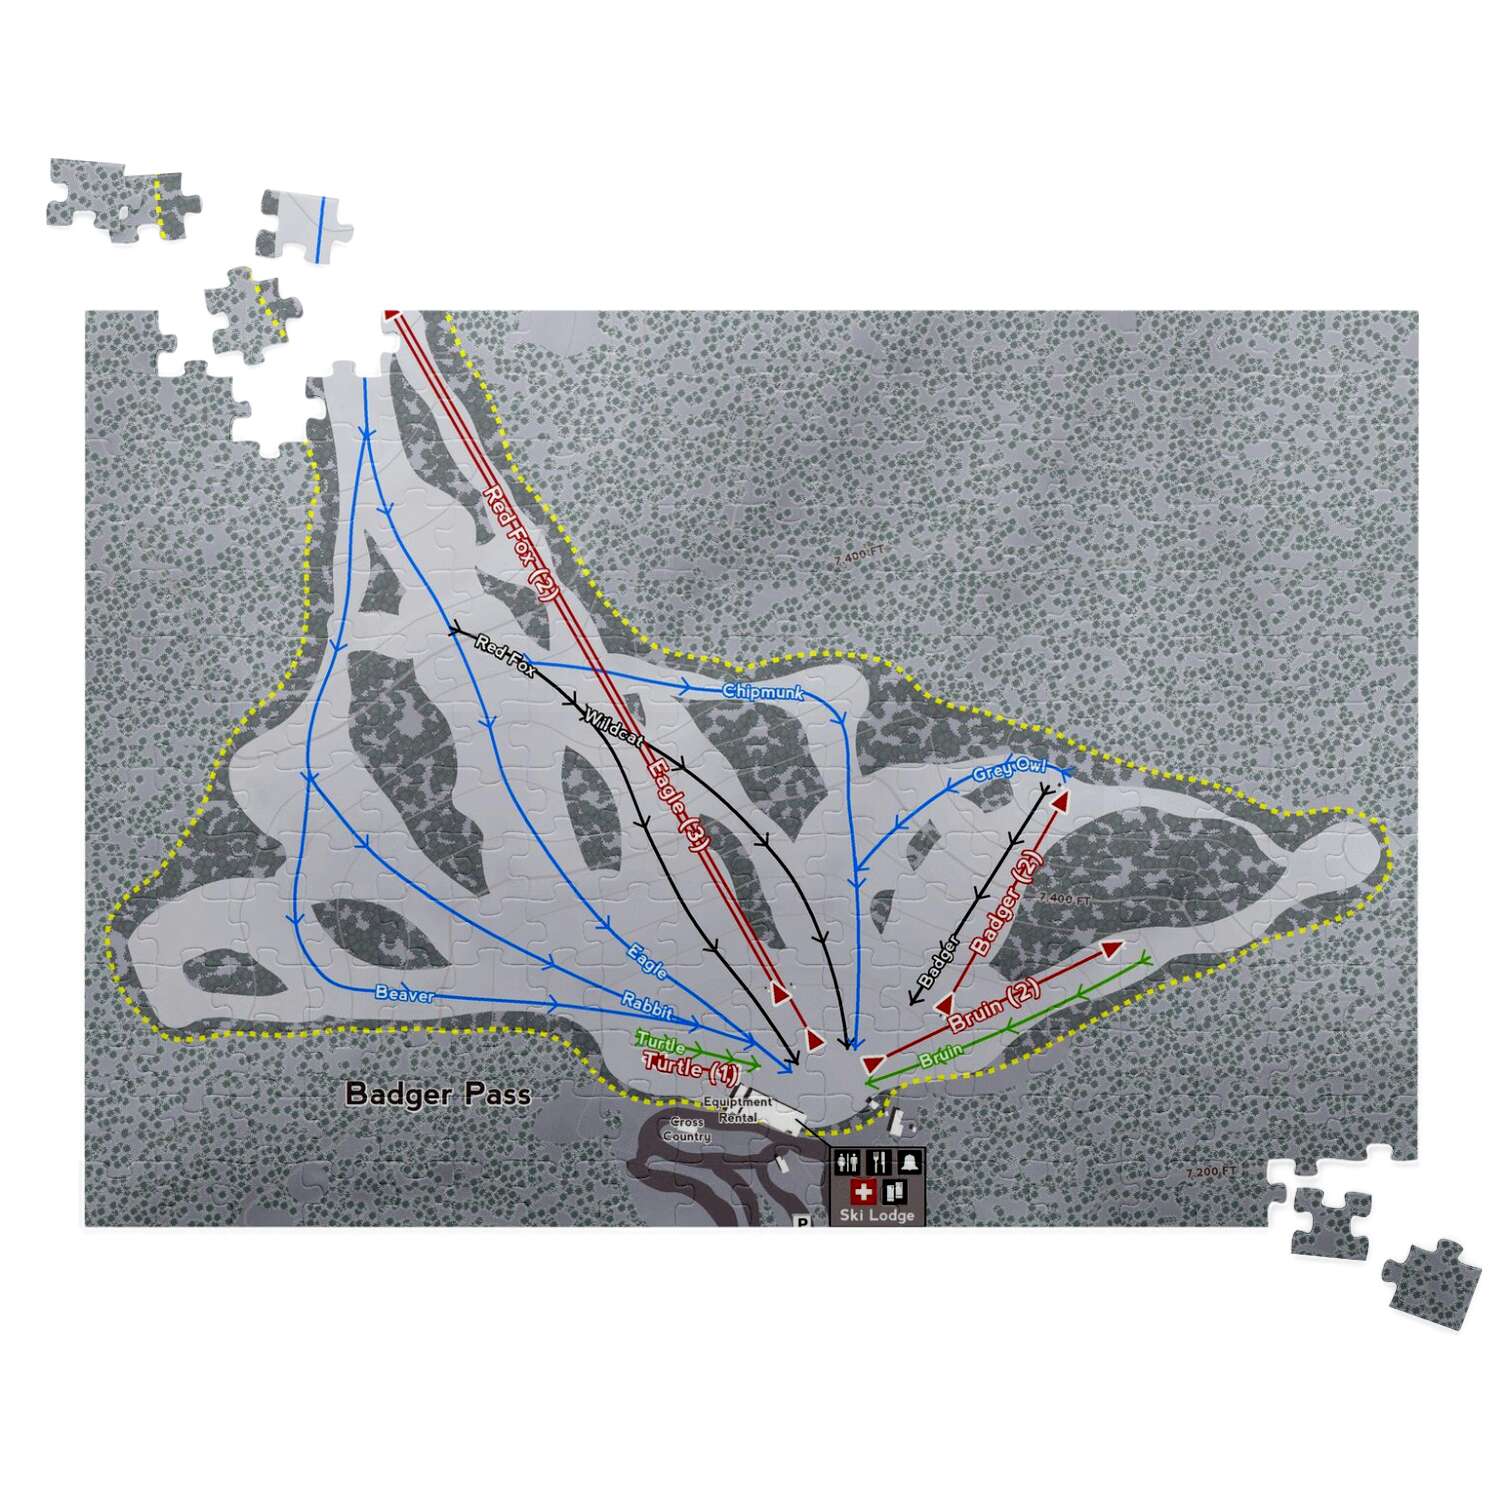 Badger Pass, California Ski Trail Map Puzzle - Powderaddicts